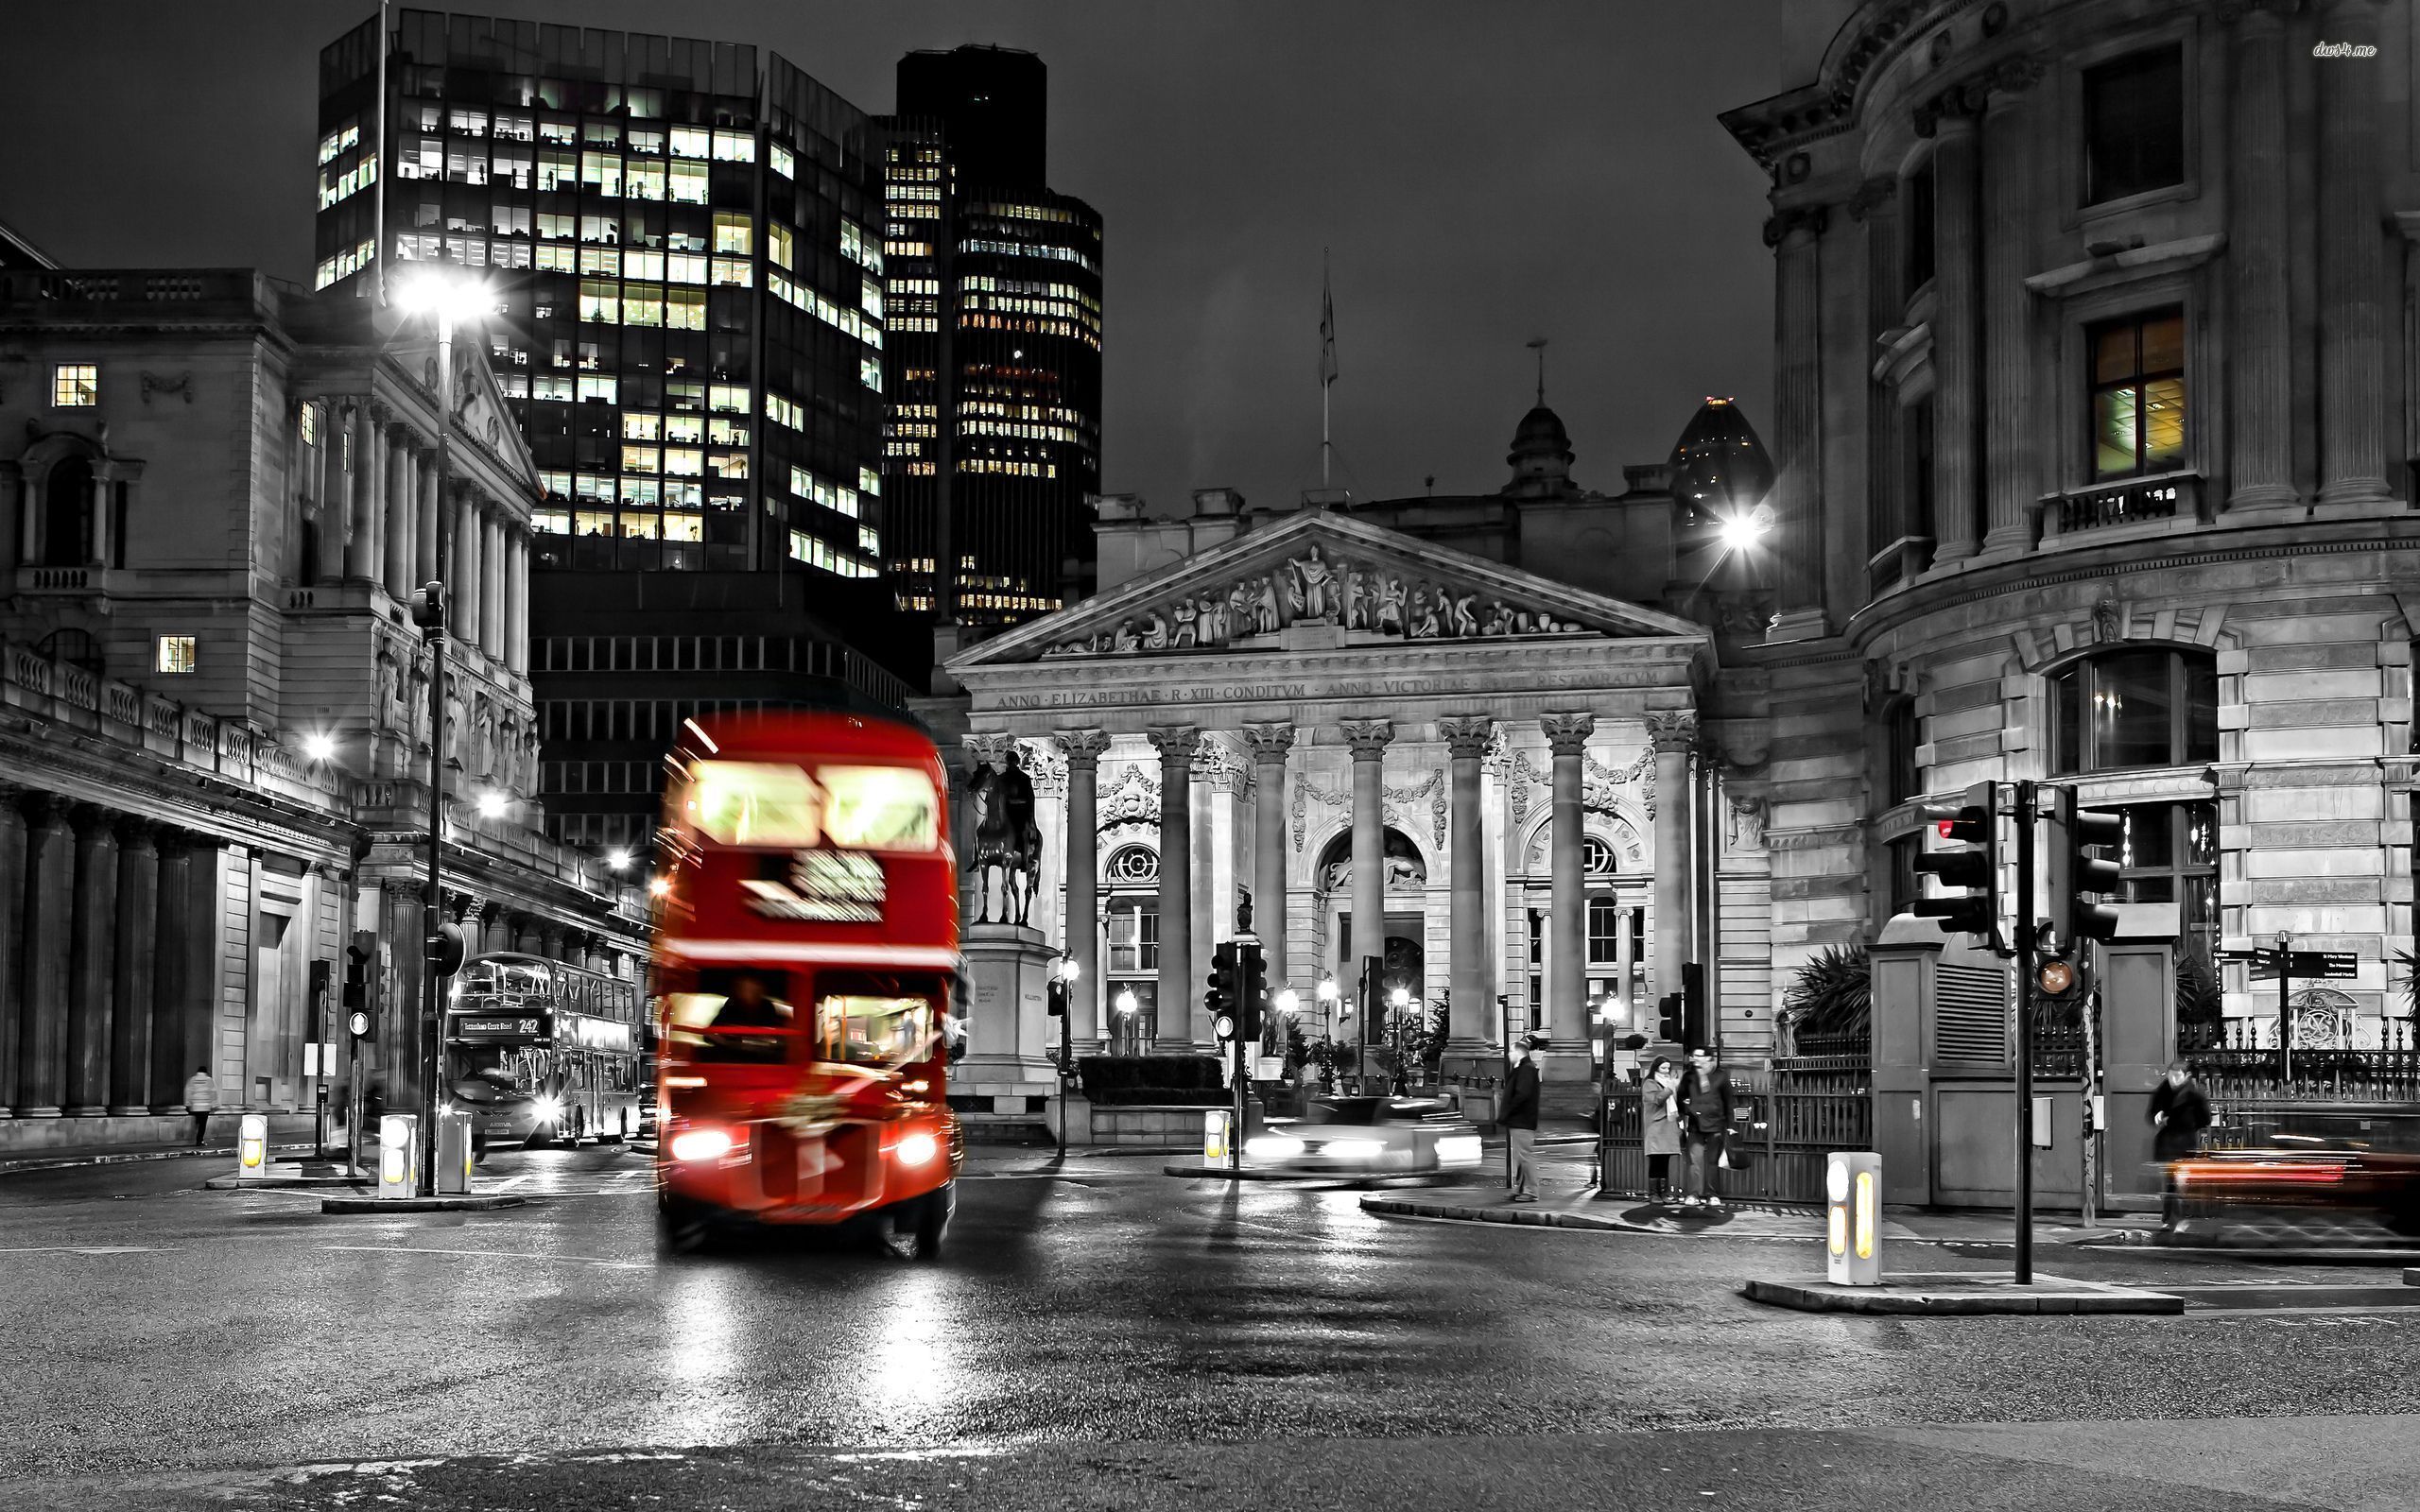 London bus on the dark streets HD wallpaper. London wallpaper, London city, London bus